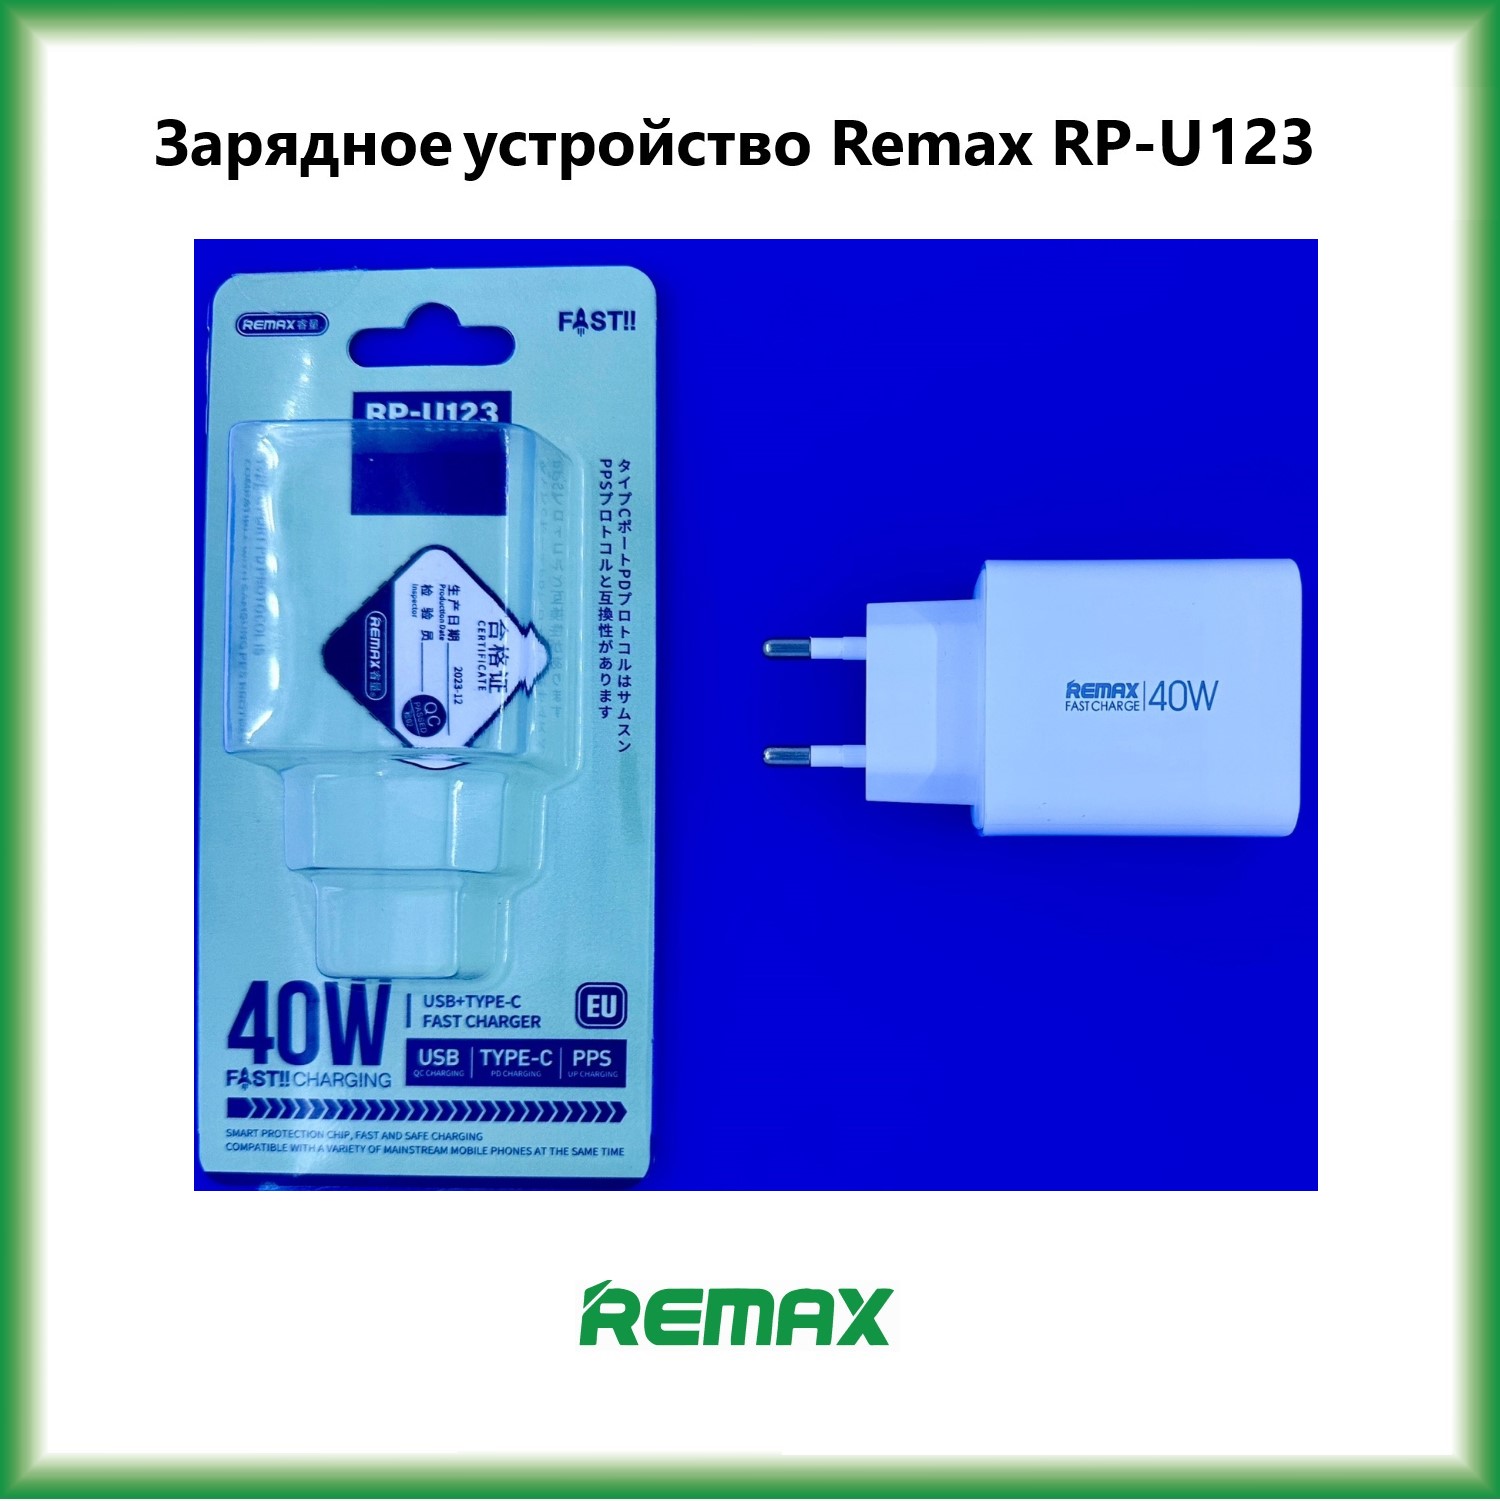 Сетевое зарядное устройство Remax RP-U123 40W High power, USB + 2 Type-C